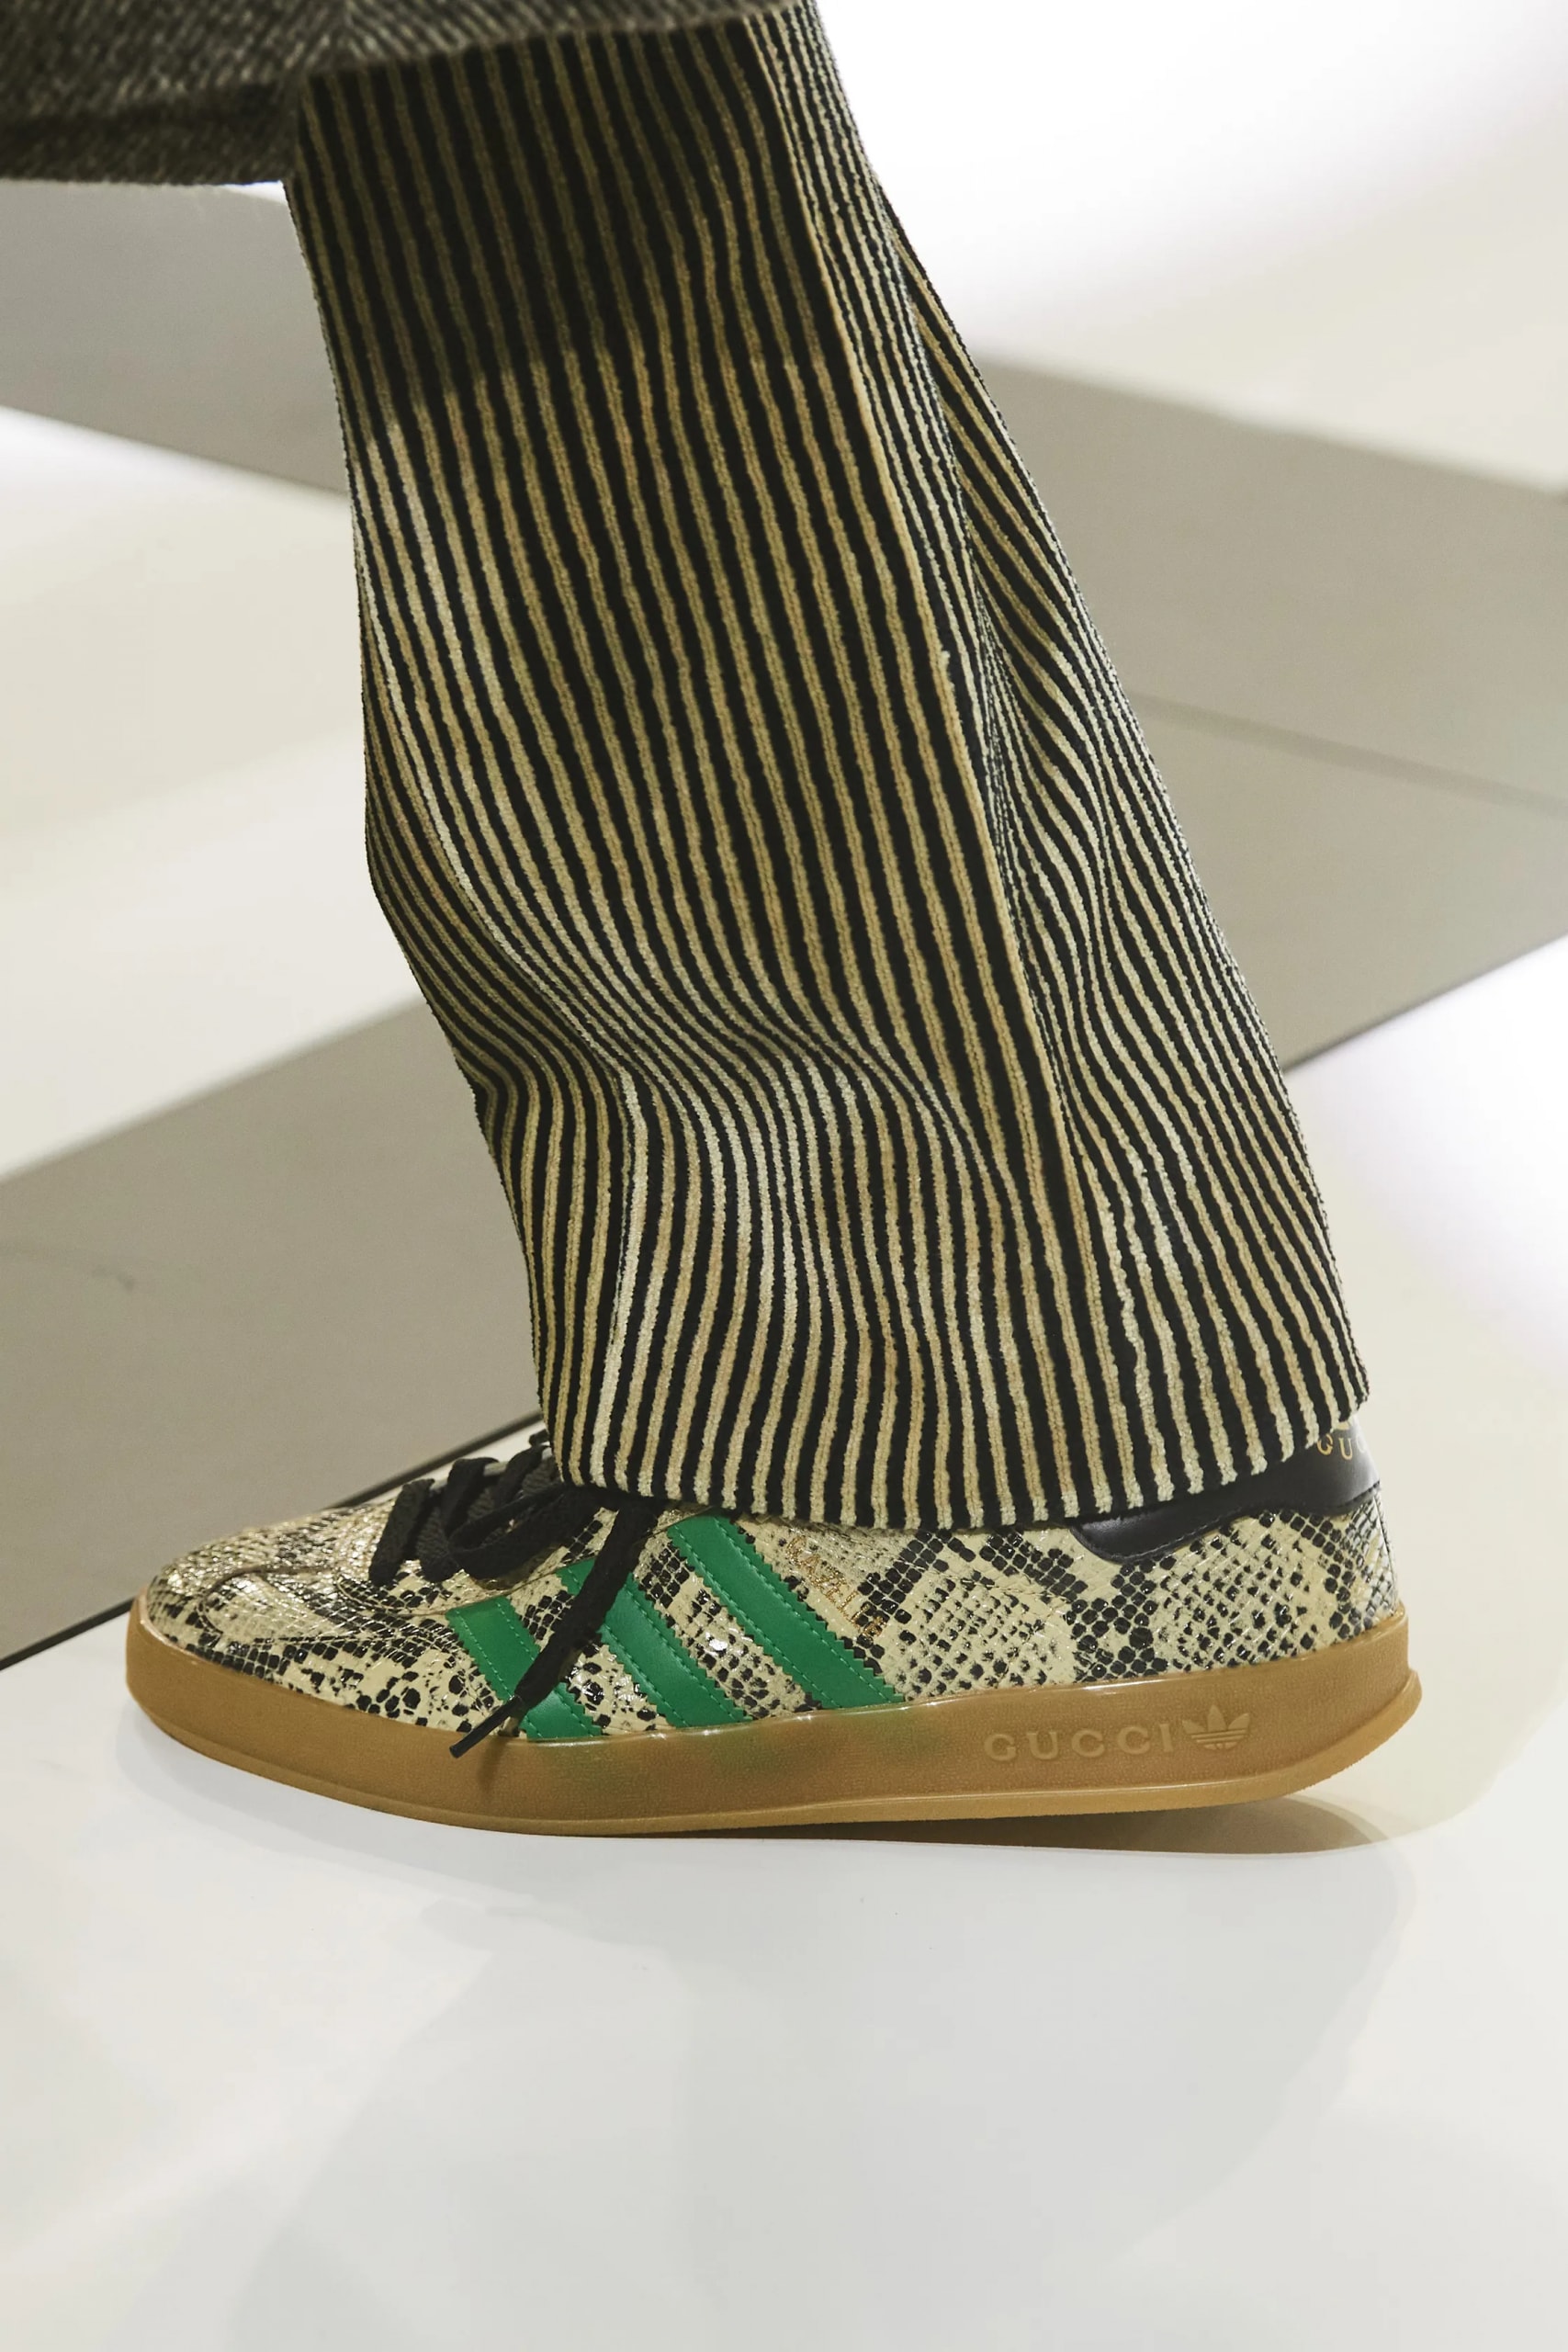 Closer Look at Gucci x adidas Gazelle Sneakers | Hypebae